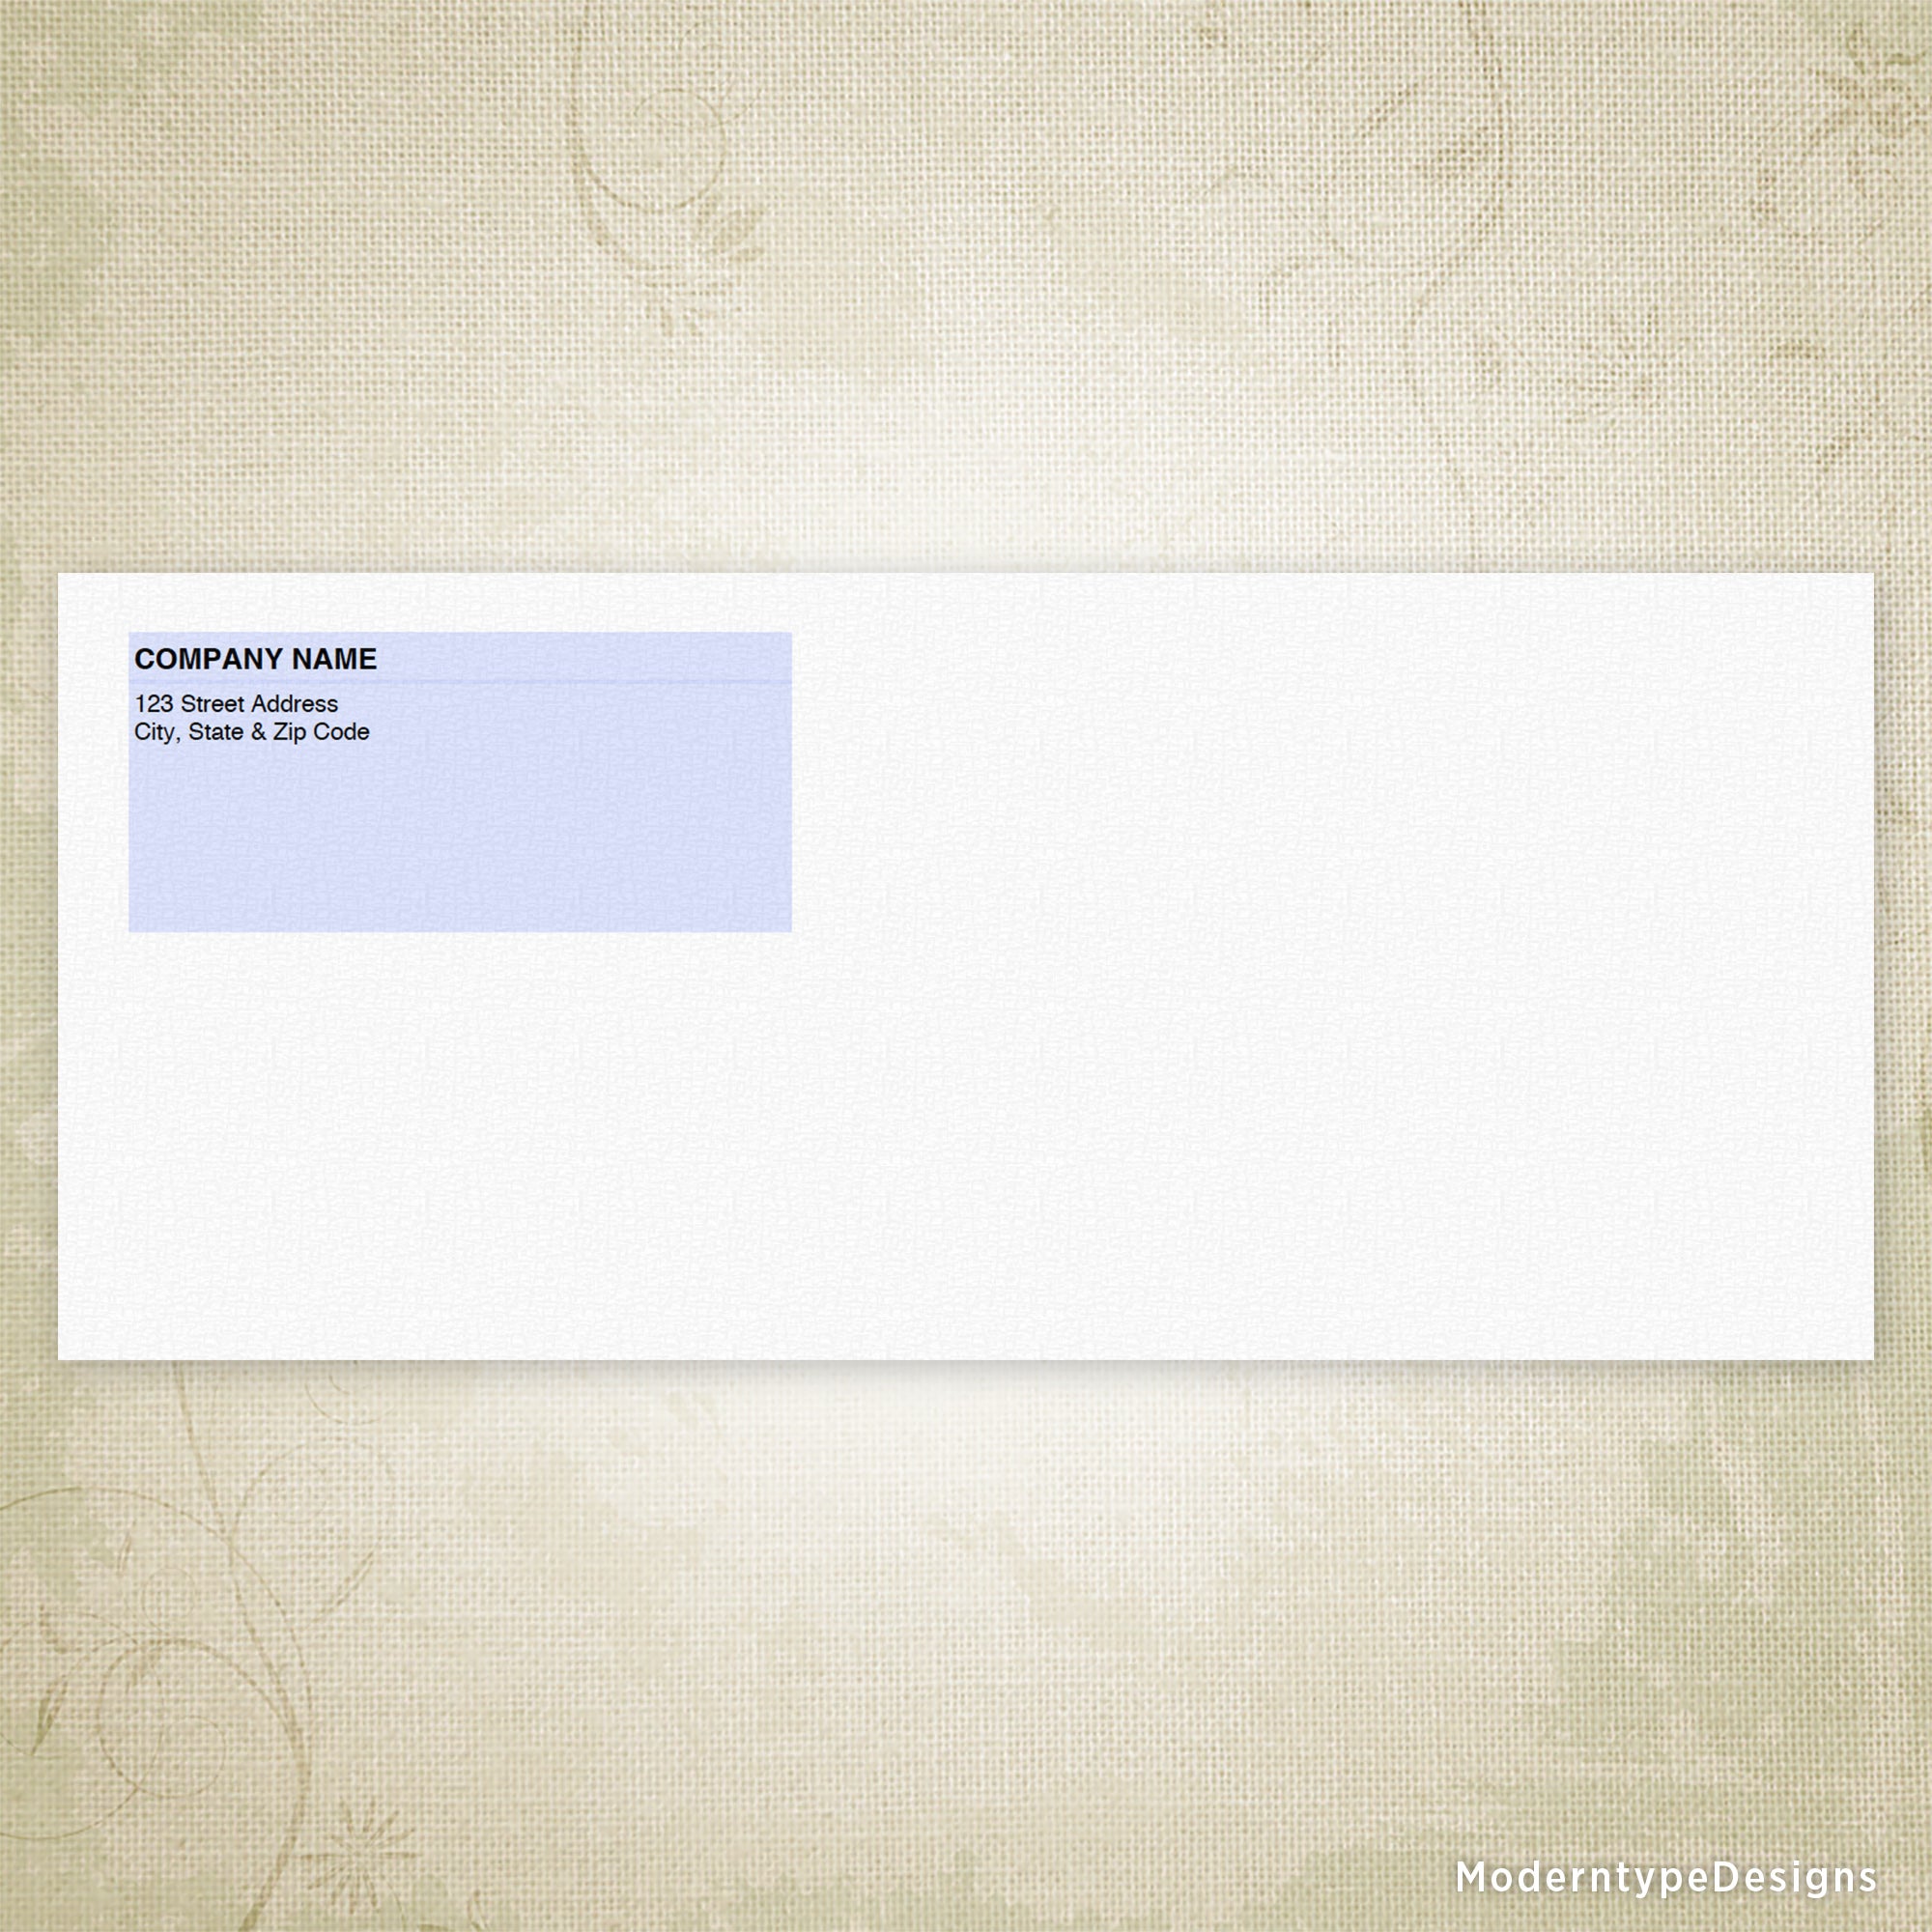 No. 10 Standard Envelope Printable, Editable